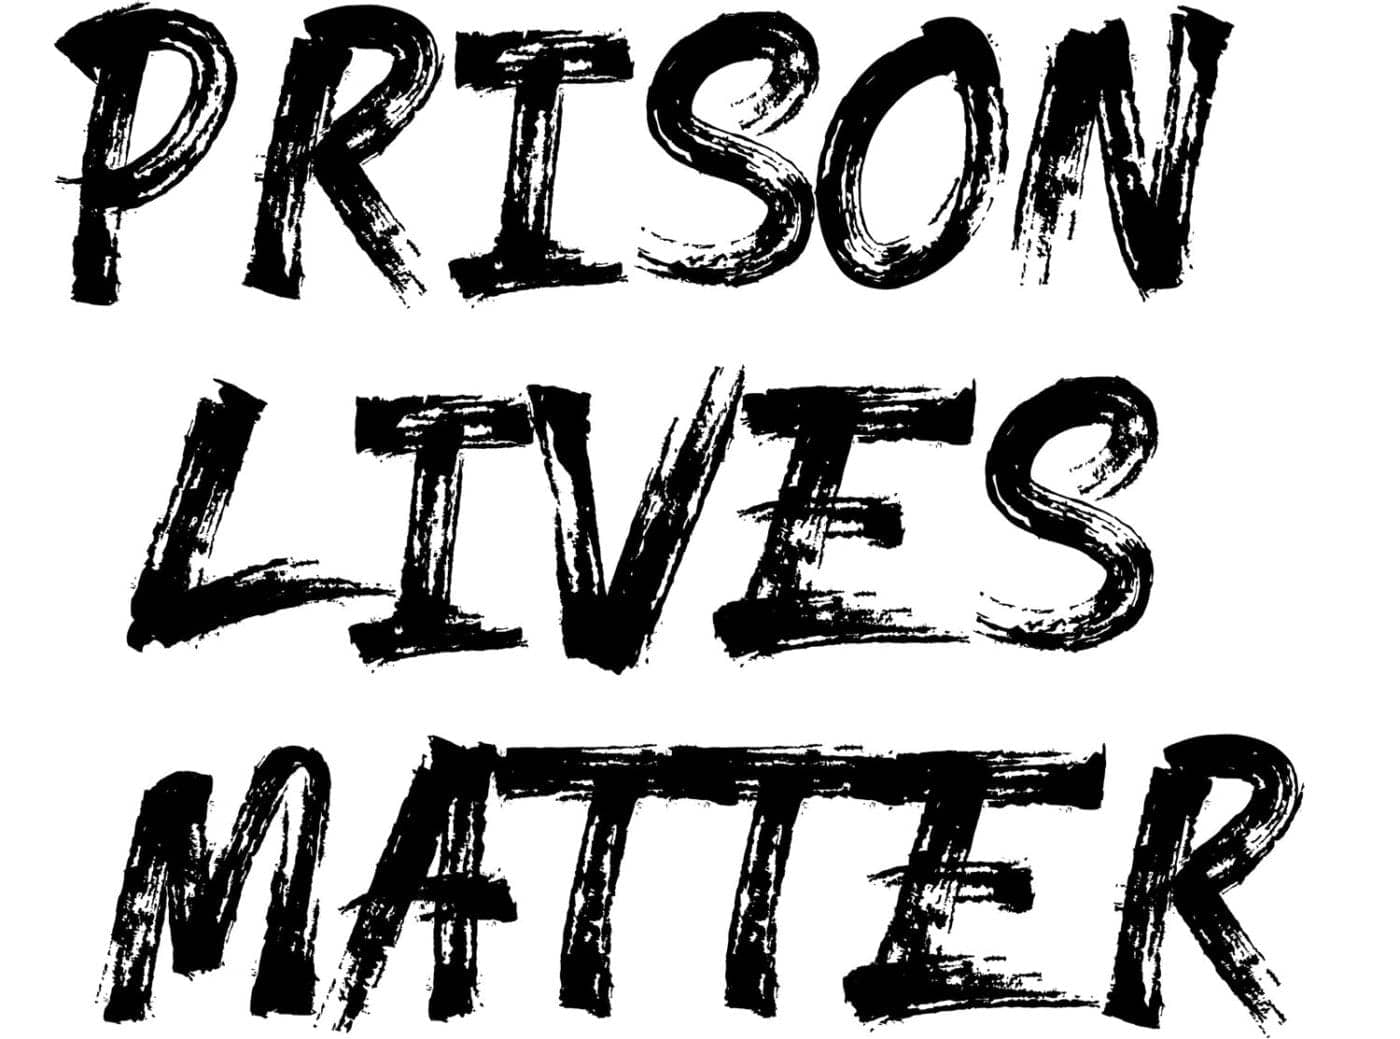 Prison-Lives-Matter-logo-1400x1039, Repression breeds resistance and rebellion, Behind Enemy Lines 